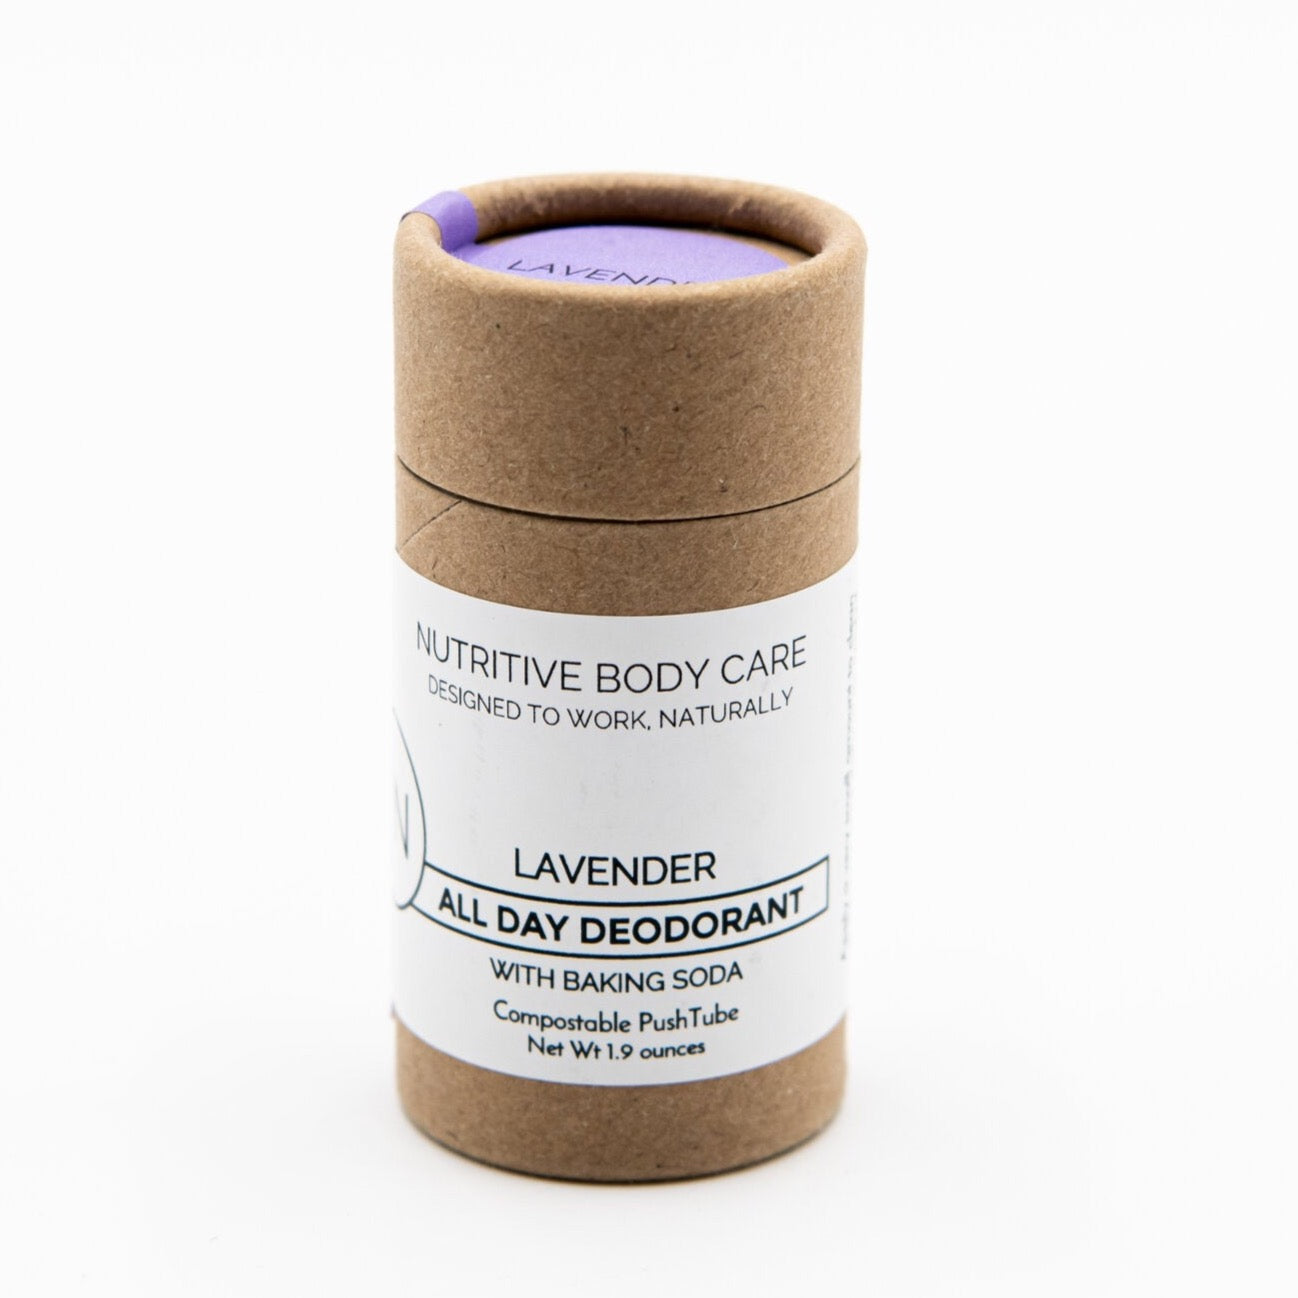 Nutritive Body Care Deodorant - Lavender